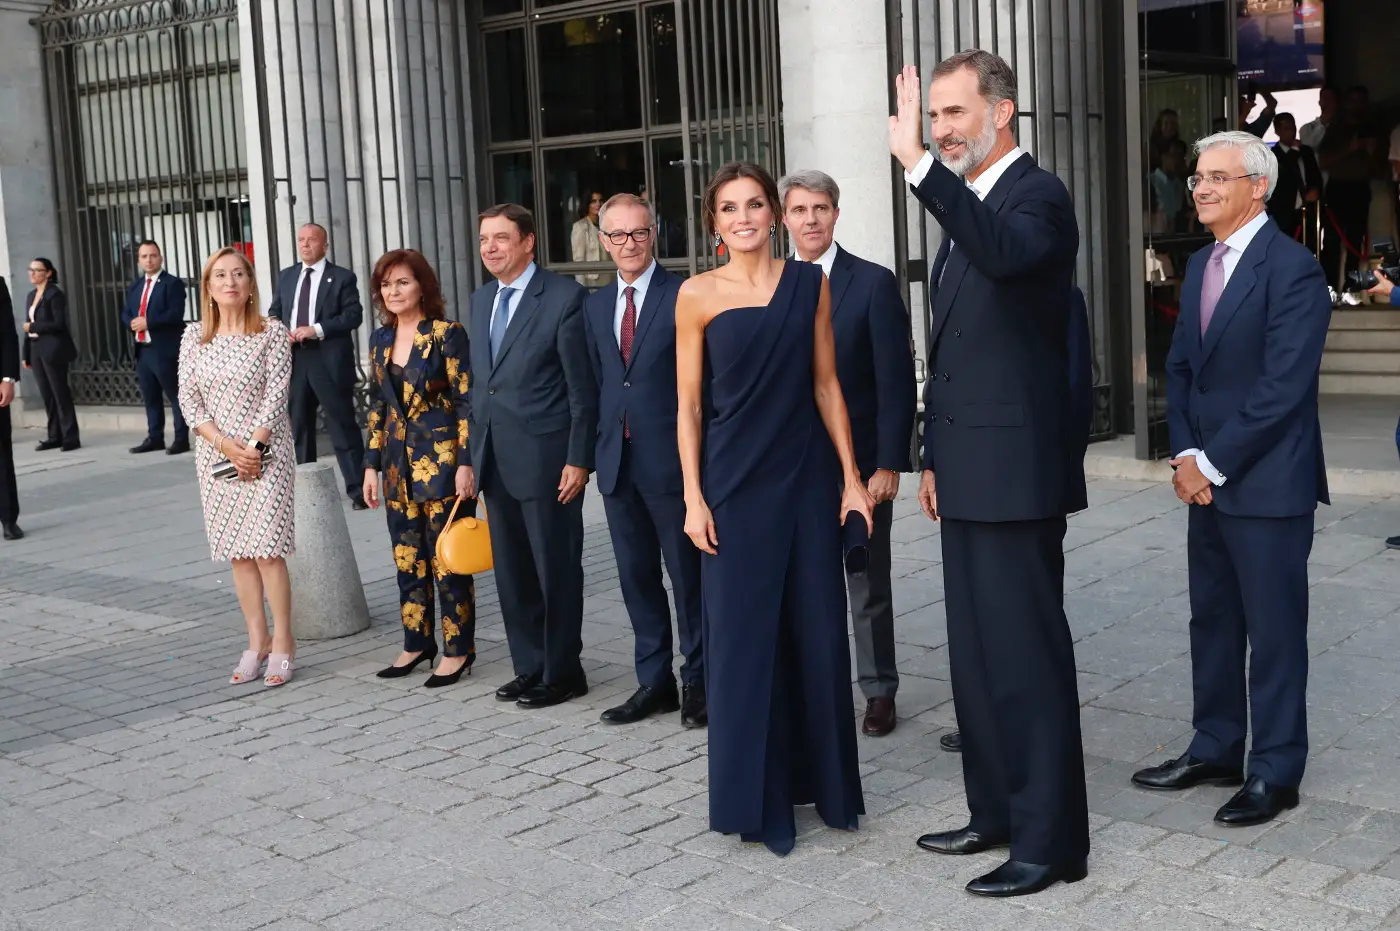 King Felipe and Queen Letizia opened the 2018 2019 season of Teatro Theatre 8